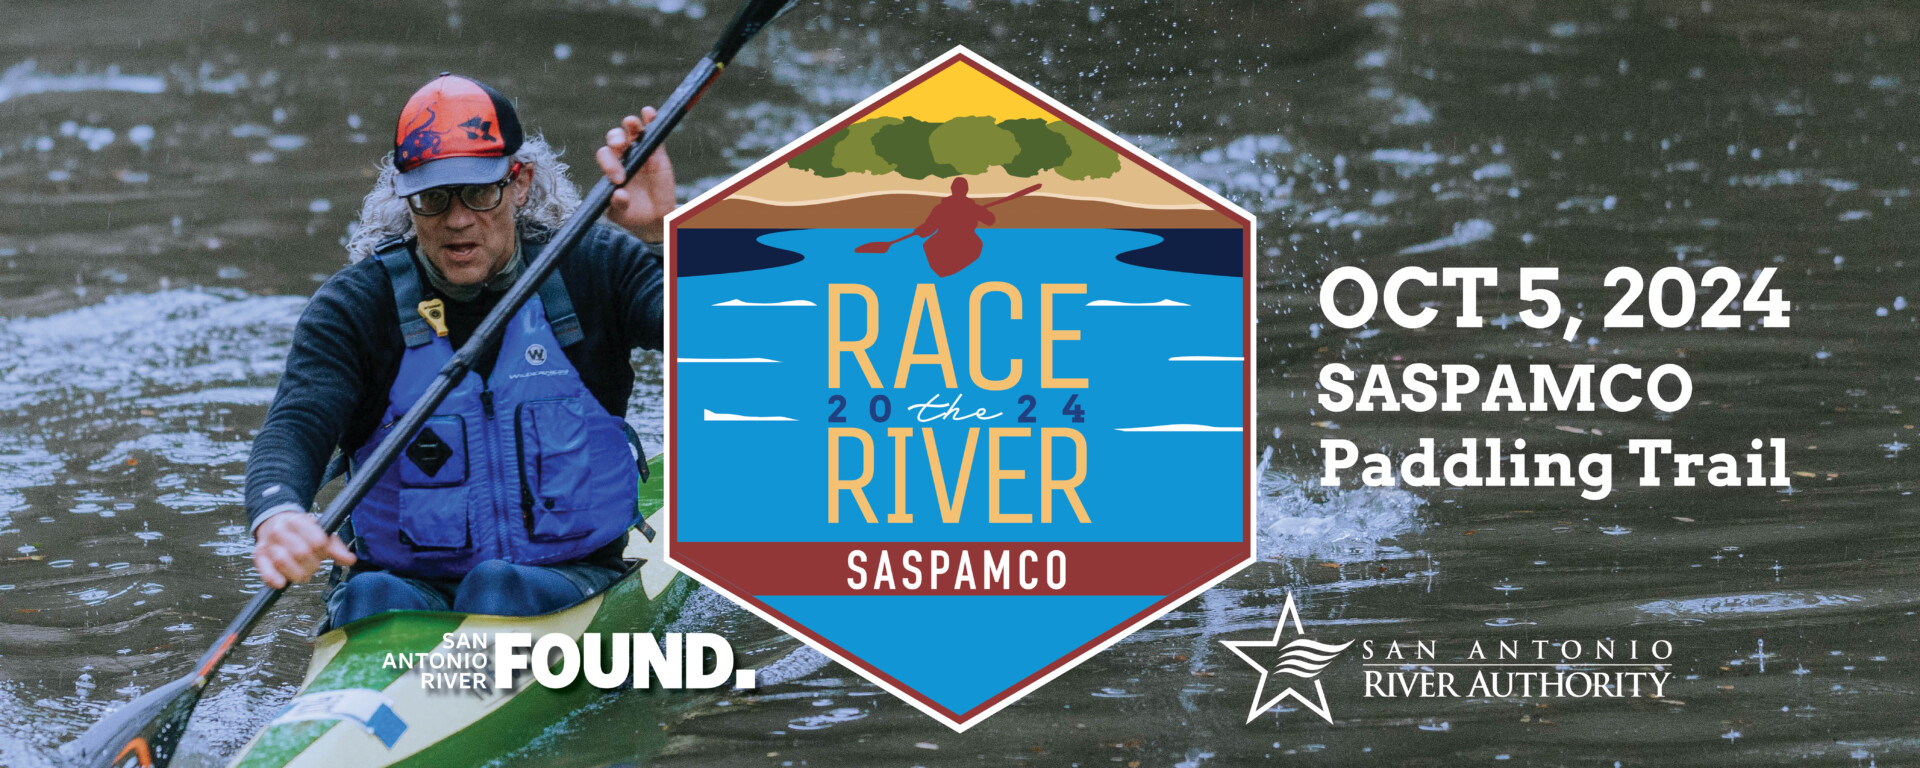 Race the River - SASPAMCO Paddling Trail